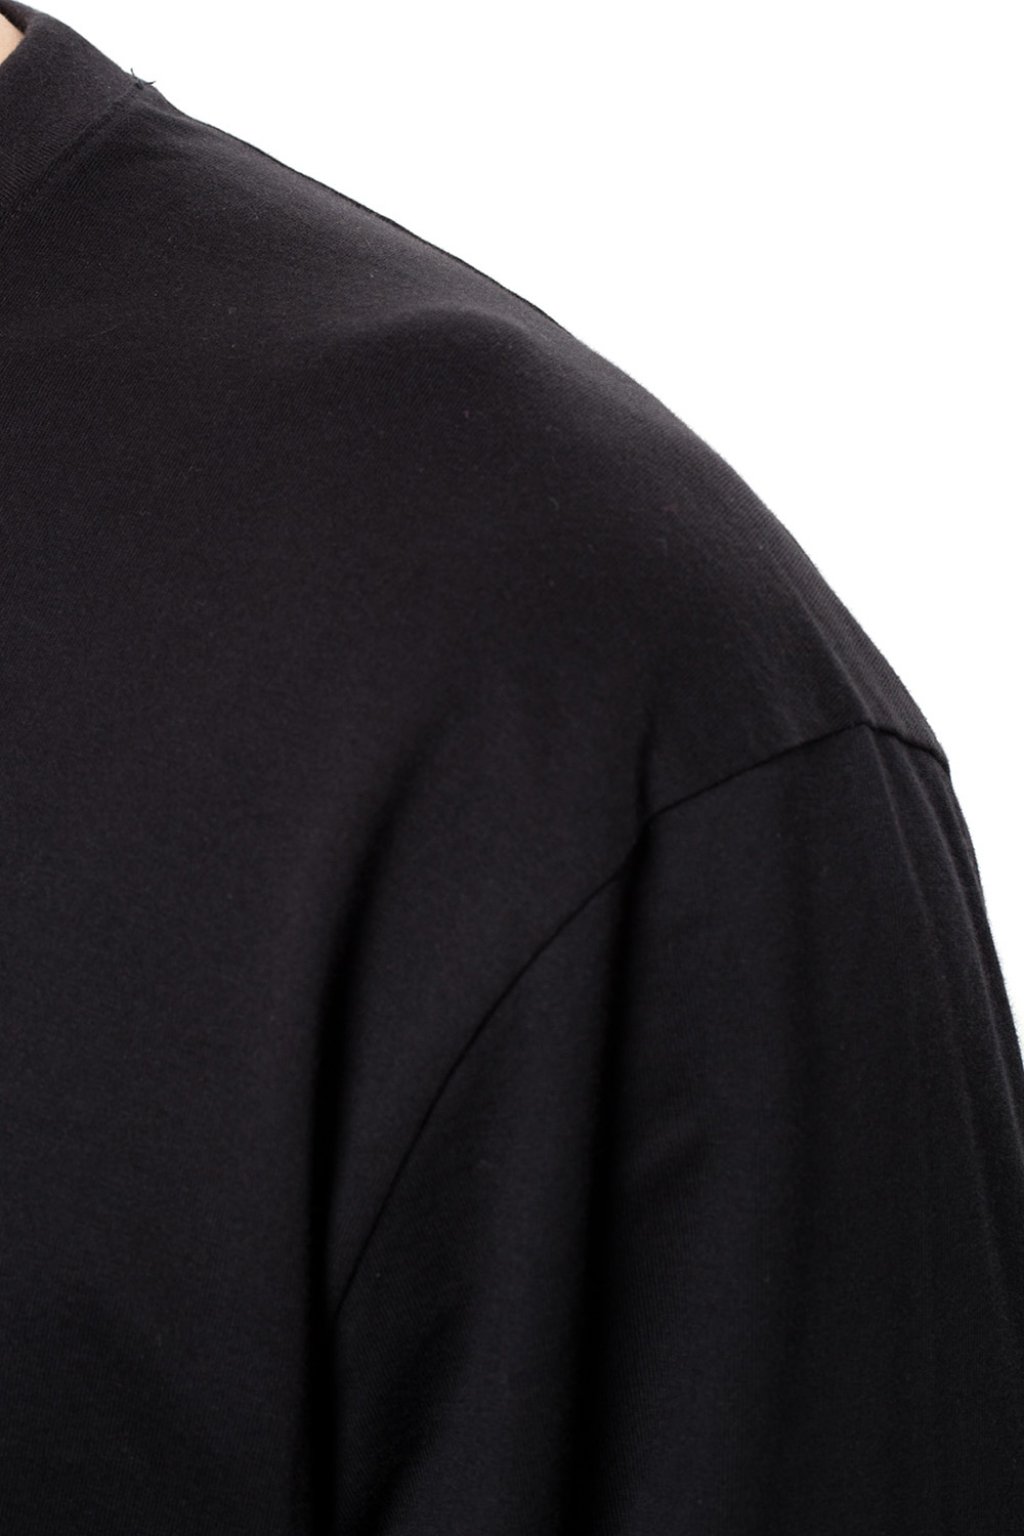 Black Long sleeve T-shirt with logo Y-3 Yohji Yamamoto - Vitkac GB